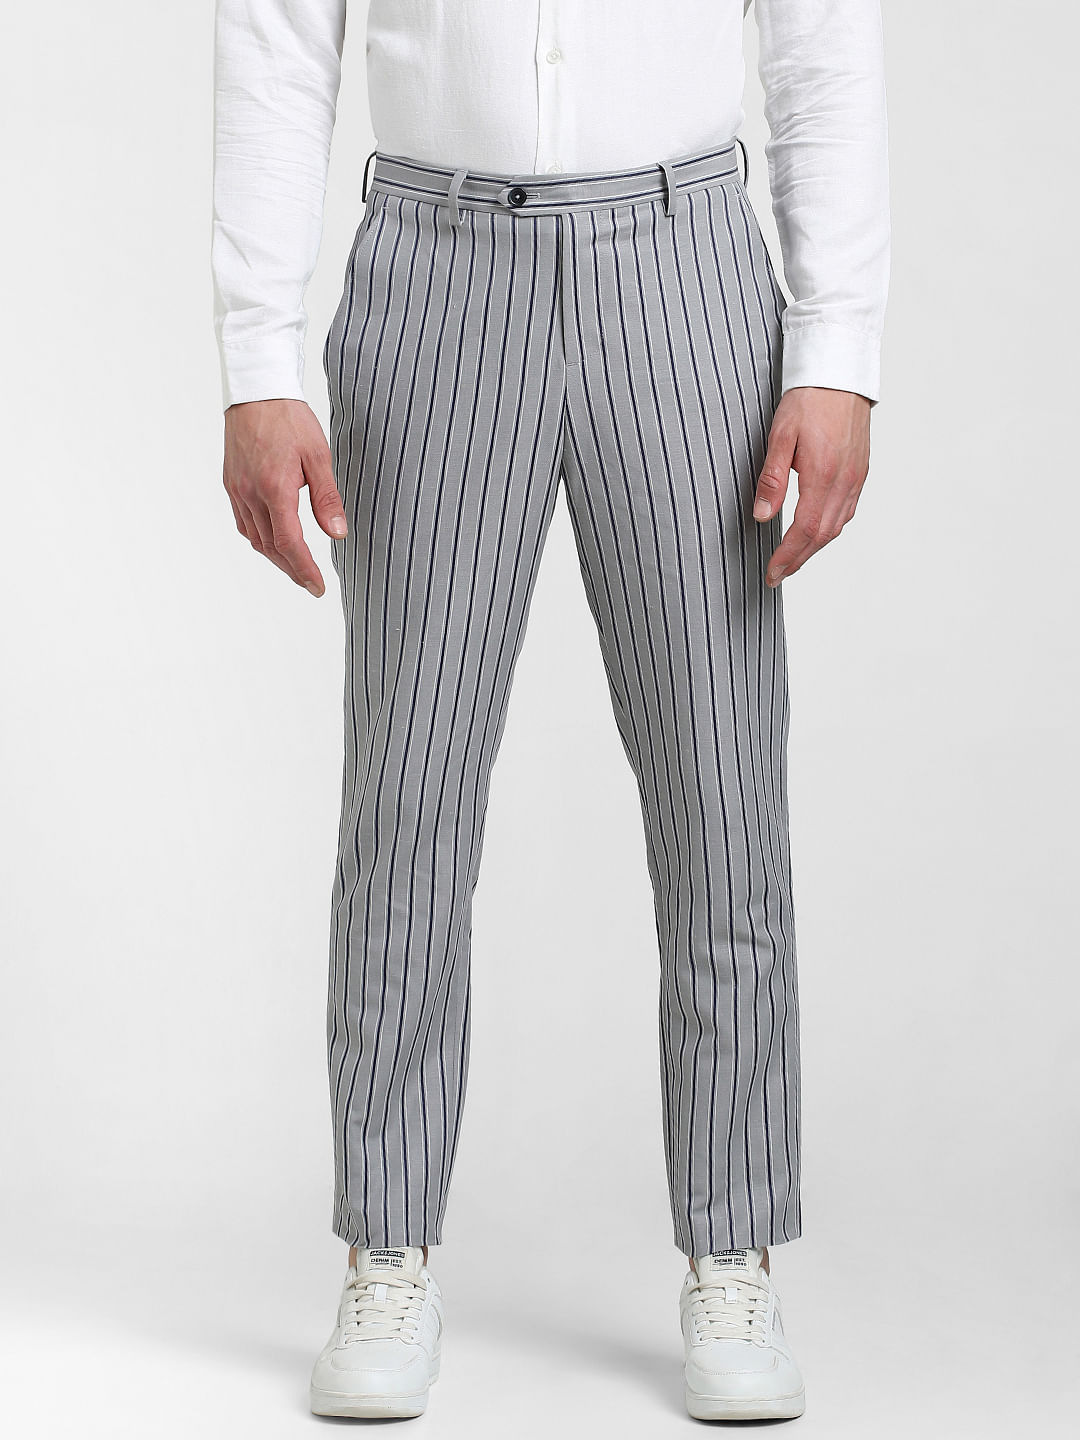 Cotton Twill Pants - Blue/white striped - Men | H&M US